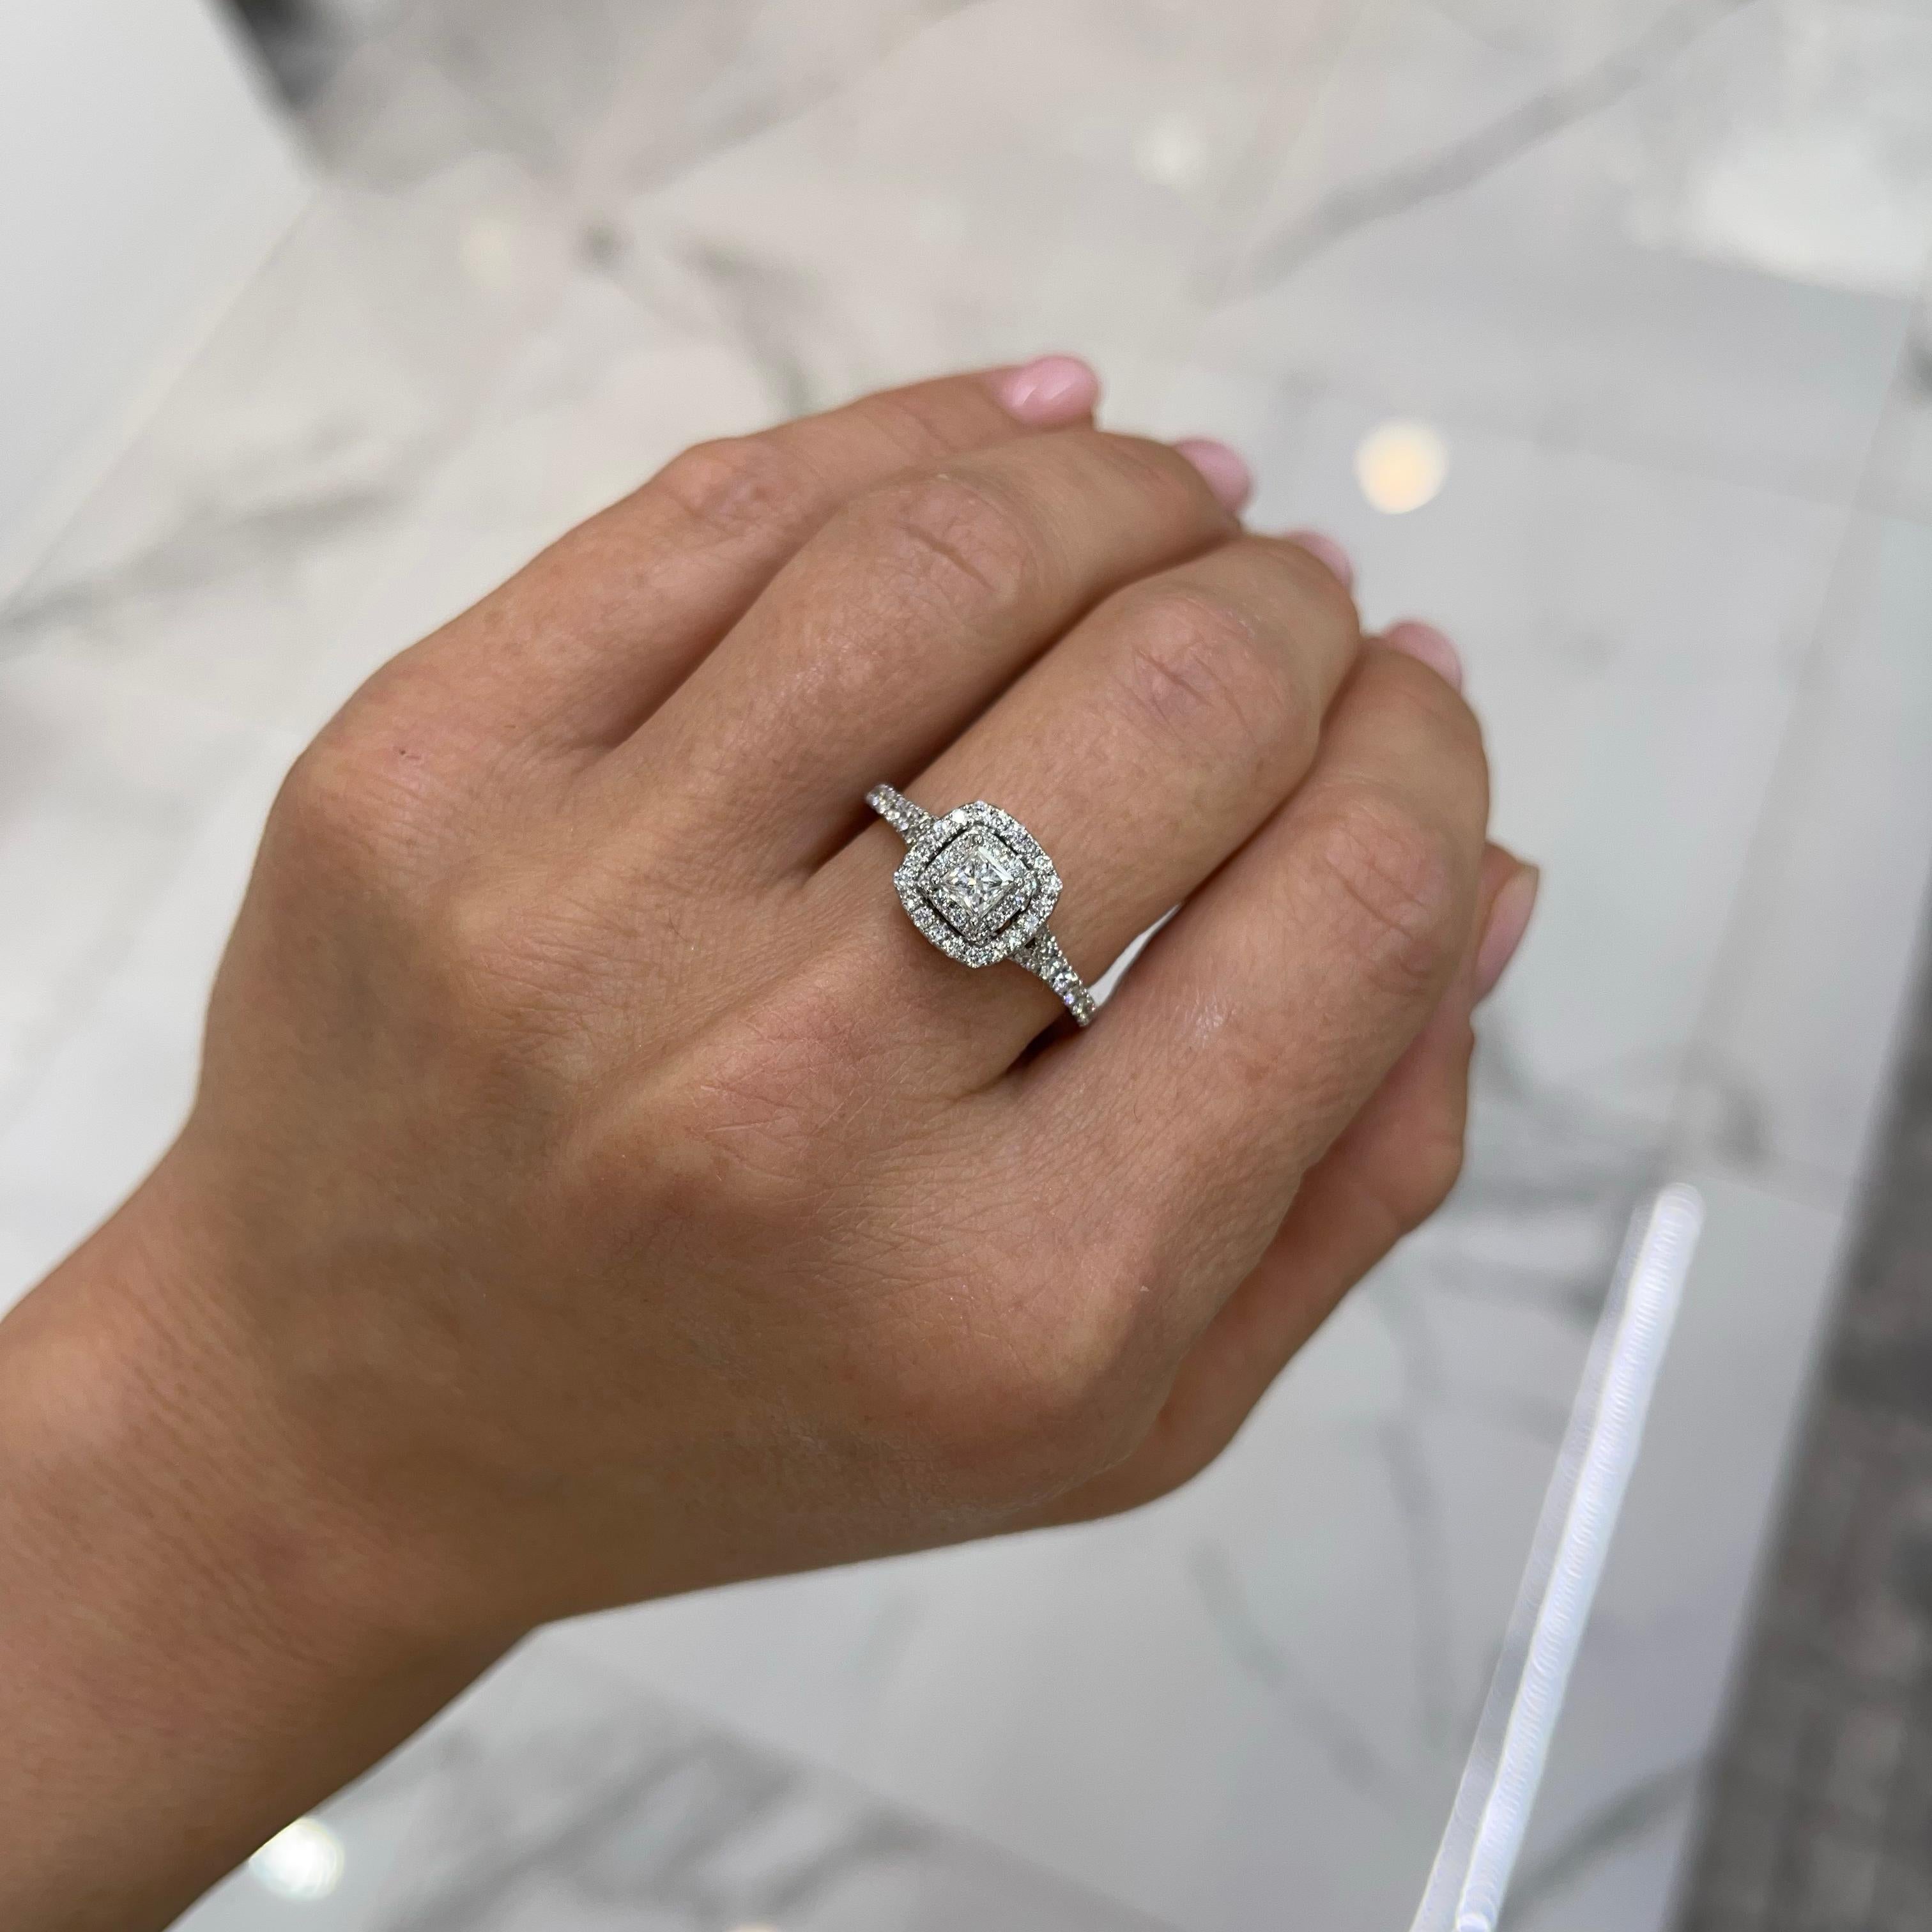 Neil Lane 14K White Gold Princess Cut Double Halo Diamond Engagement Ring For Sale 1